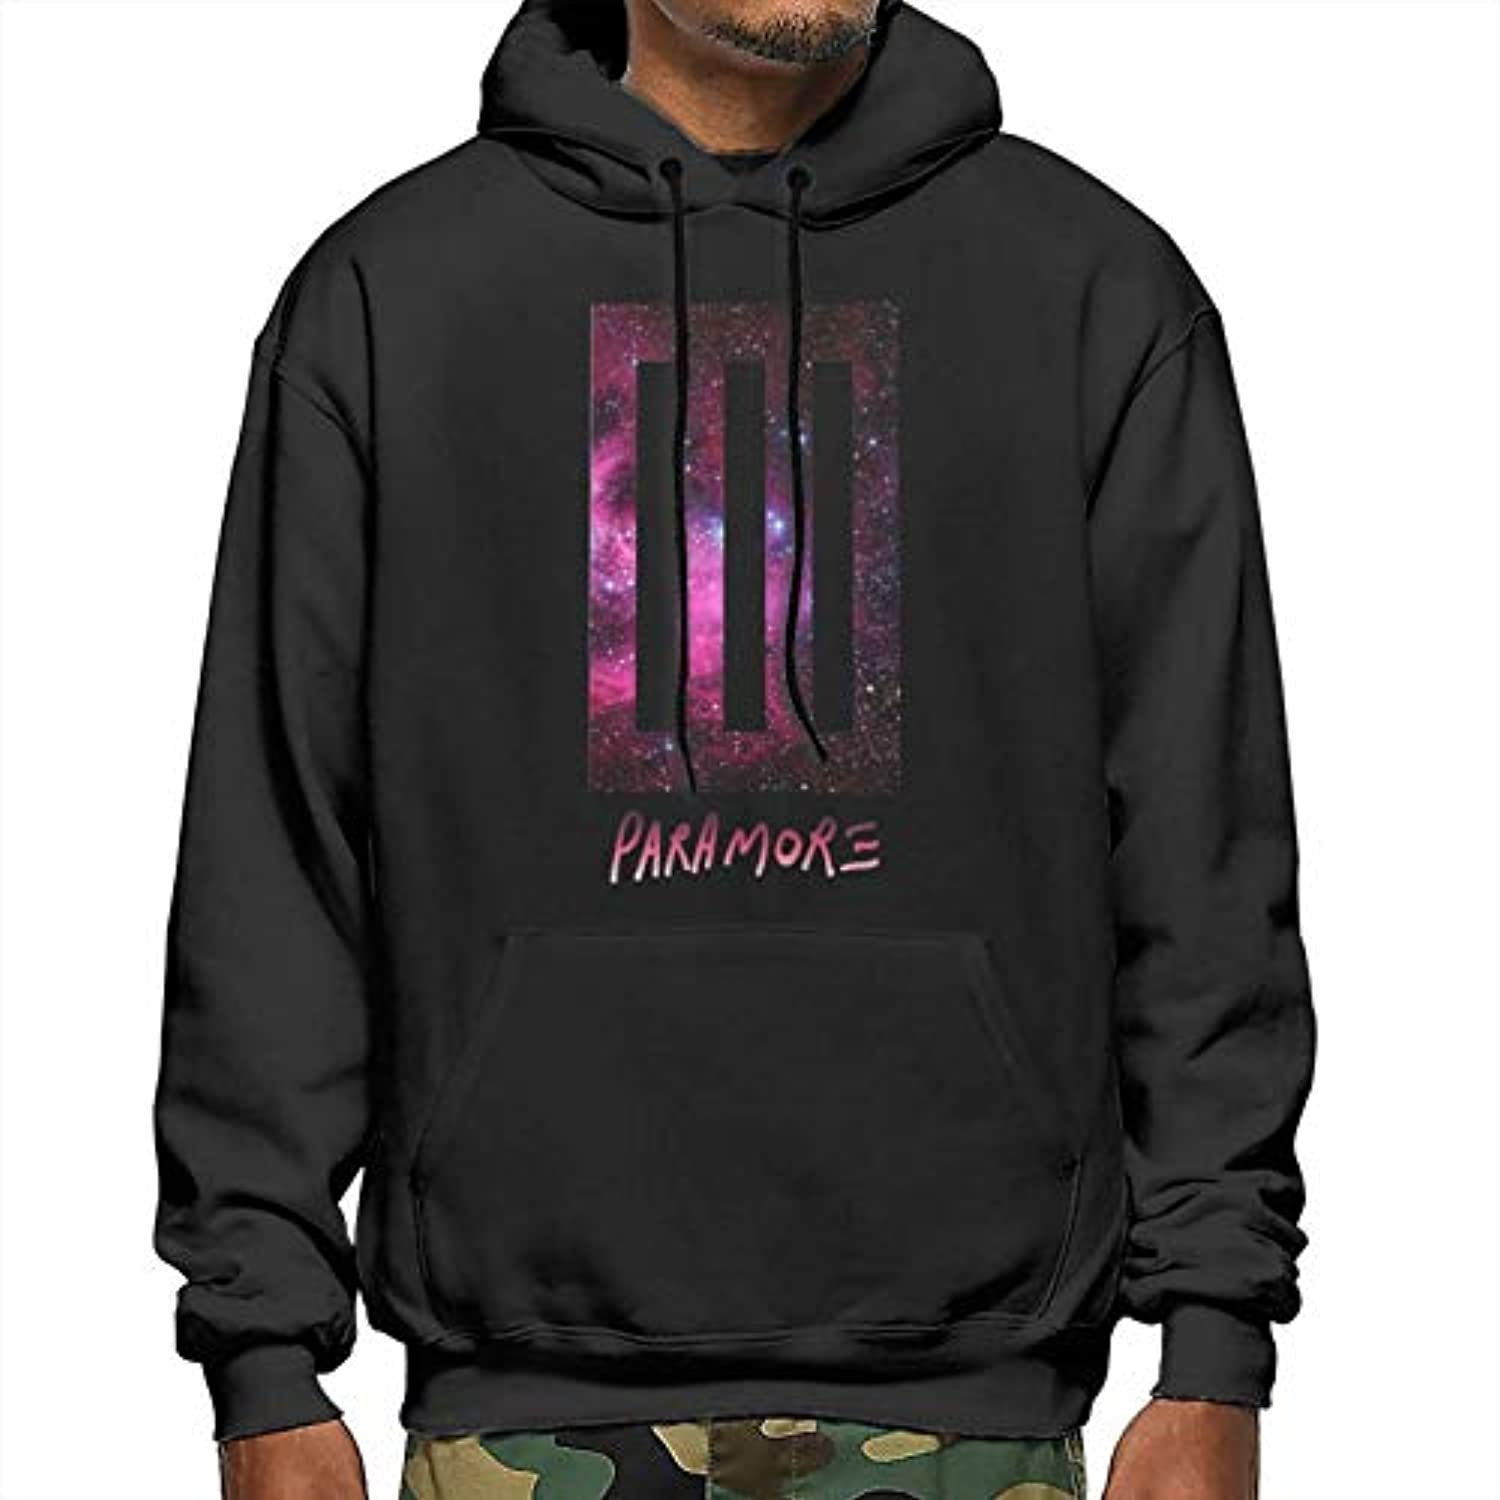 Paramore Men's Hoodie - Fashion Pullover Sweatshirt